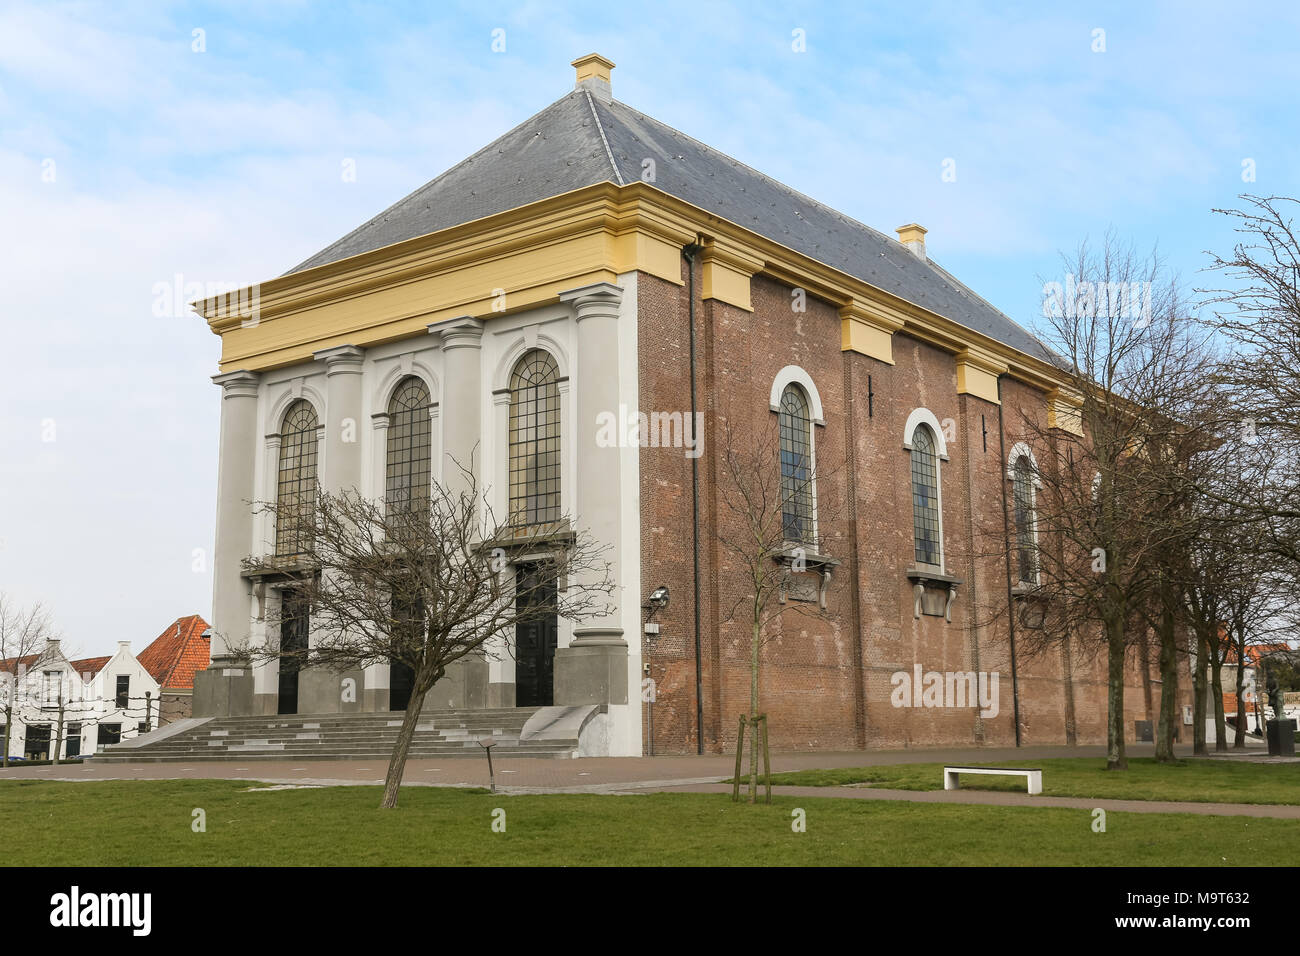 Thirteenth century New Church in the old Dutch city Zierikzee, Zeeland, Netherlands Photo taken on March 25, 2018 Stock Photo